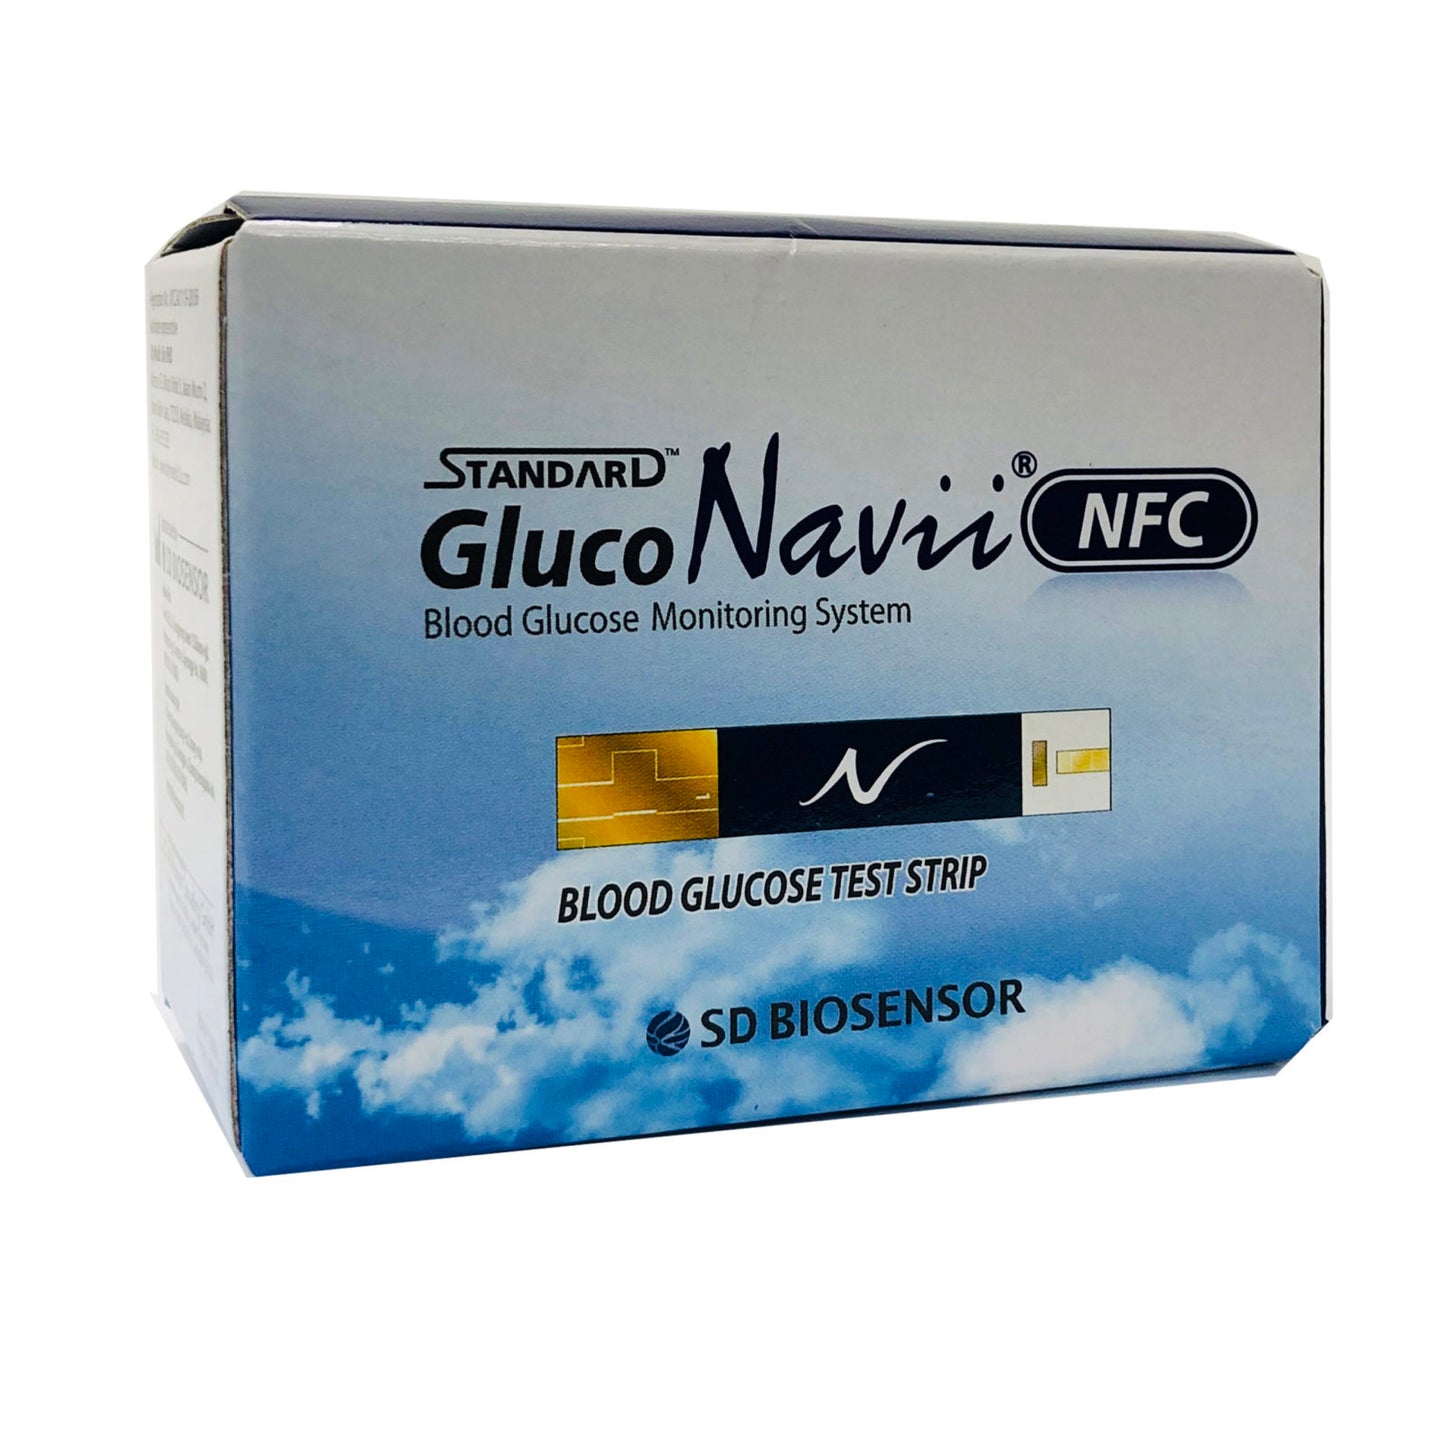 Gluco Navii Gluconavii NFC Test Strips